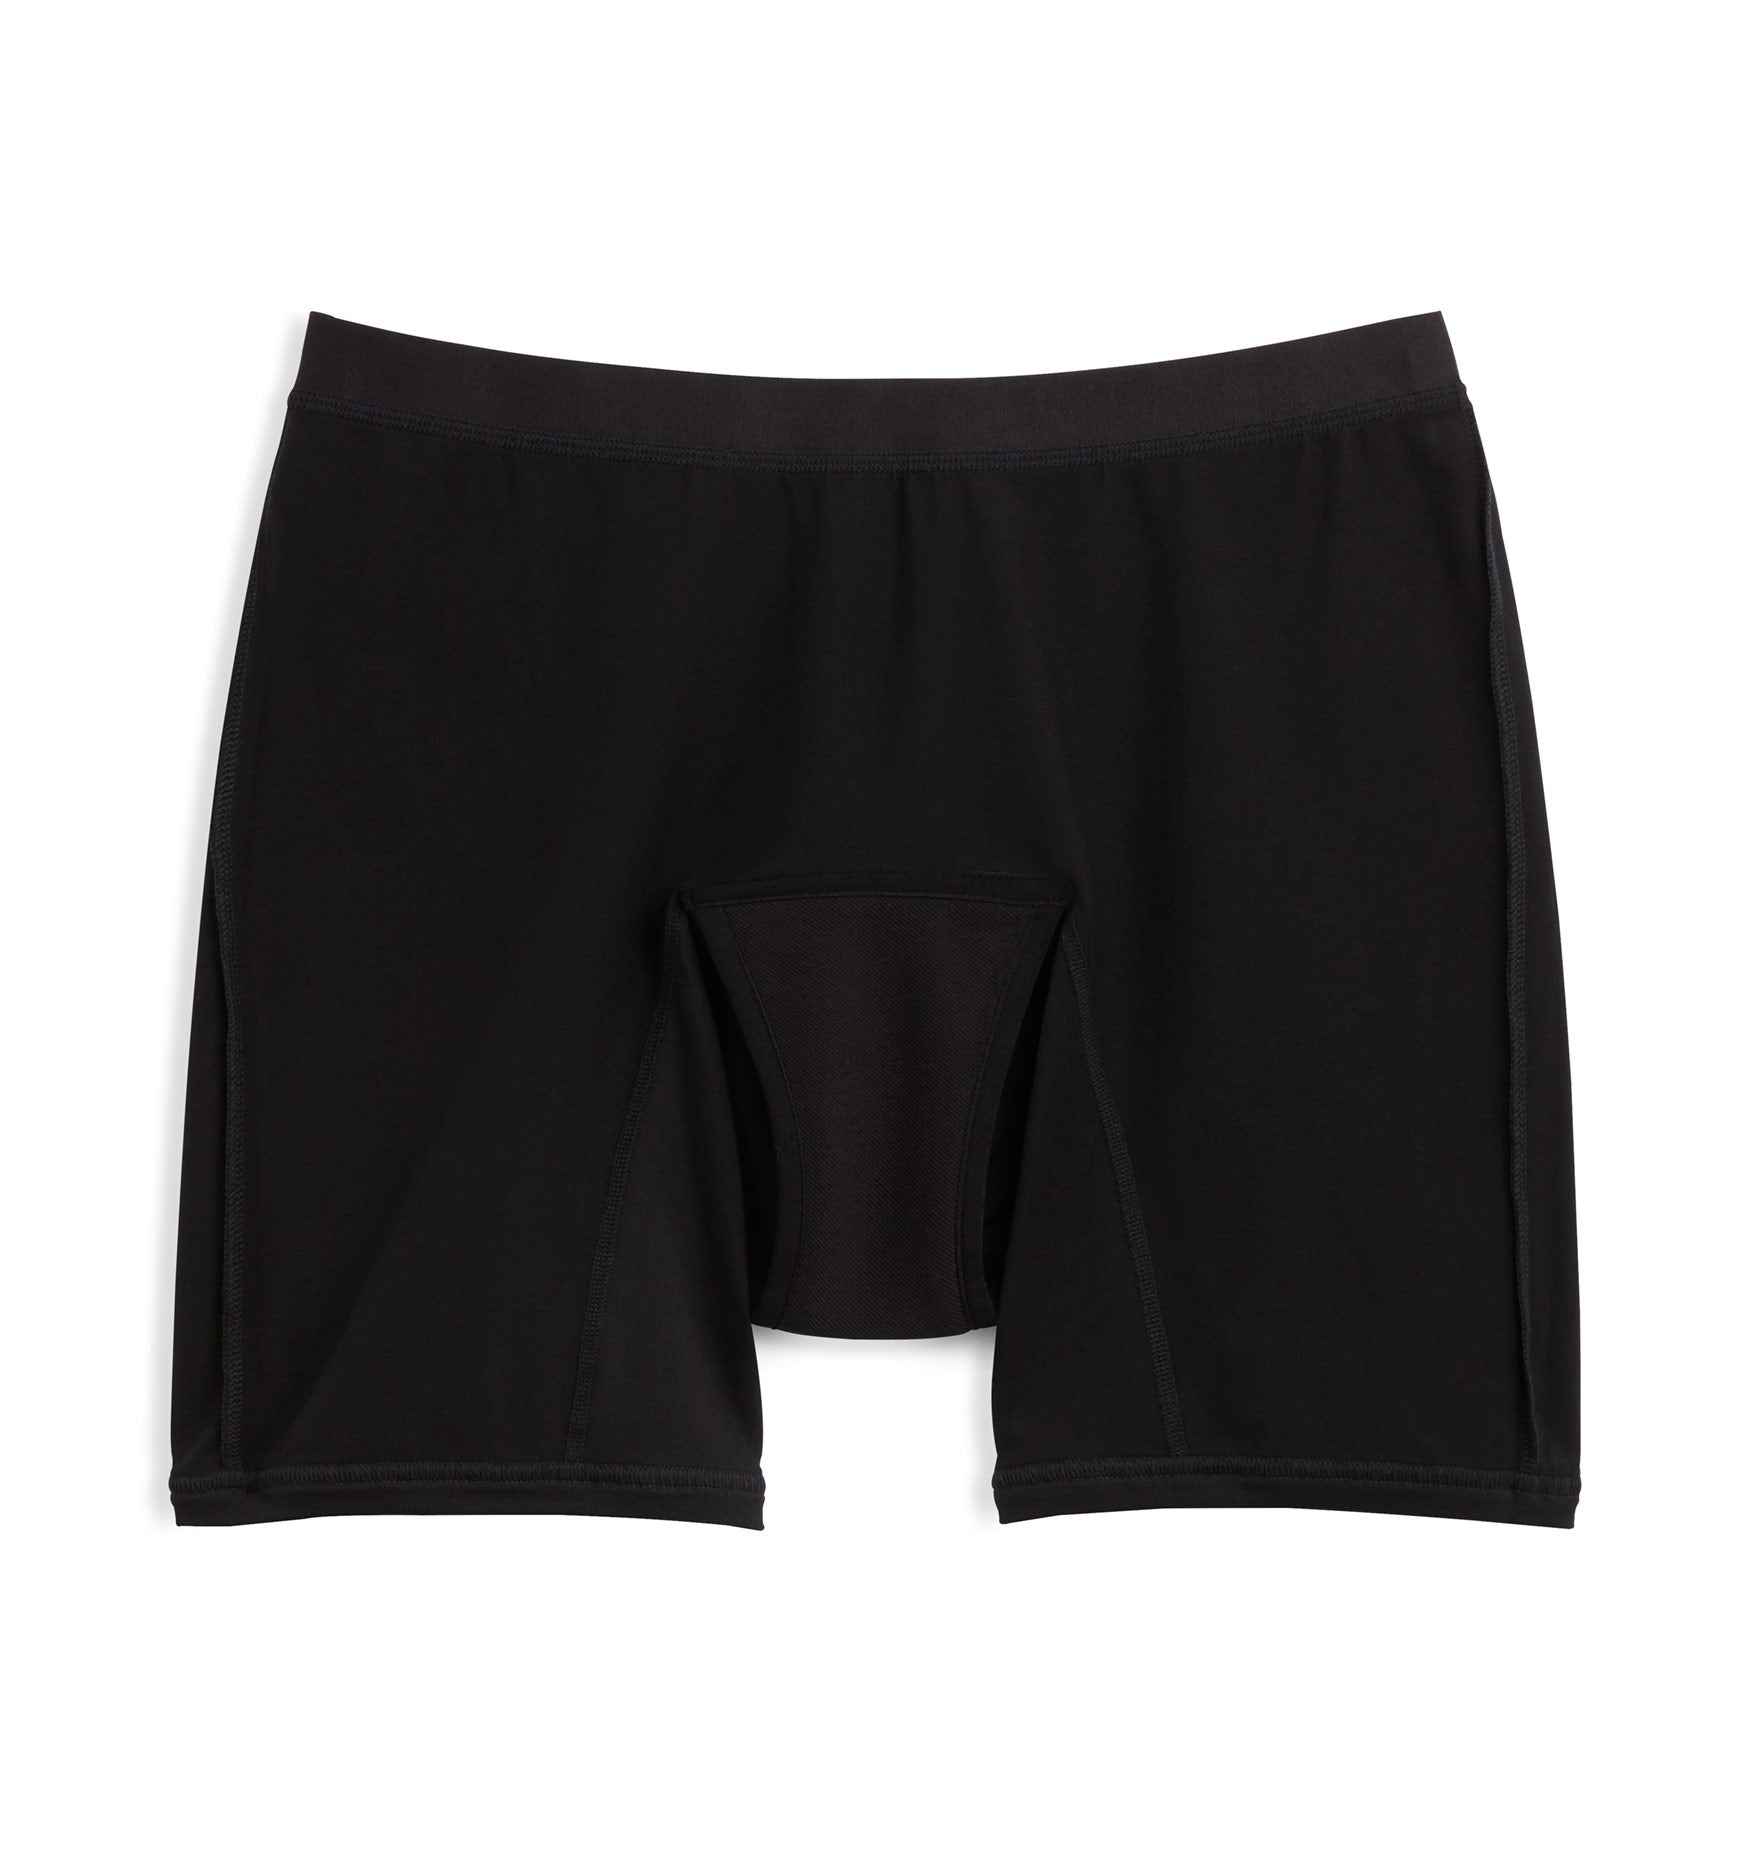 Period Underwear for Women Leak Proof Boy Short Absorbent Period Boxer  Briefs Mid Waist Cotton Panties (Grey+Black,Medium) at  Women's  Clothing store